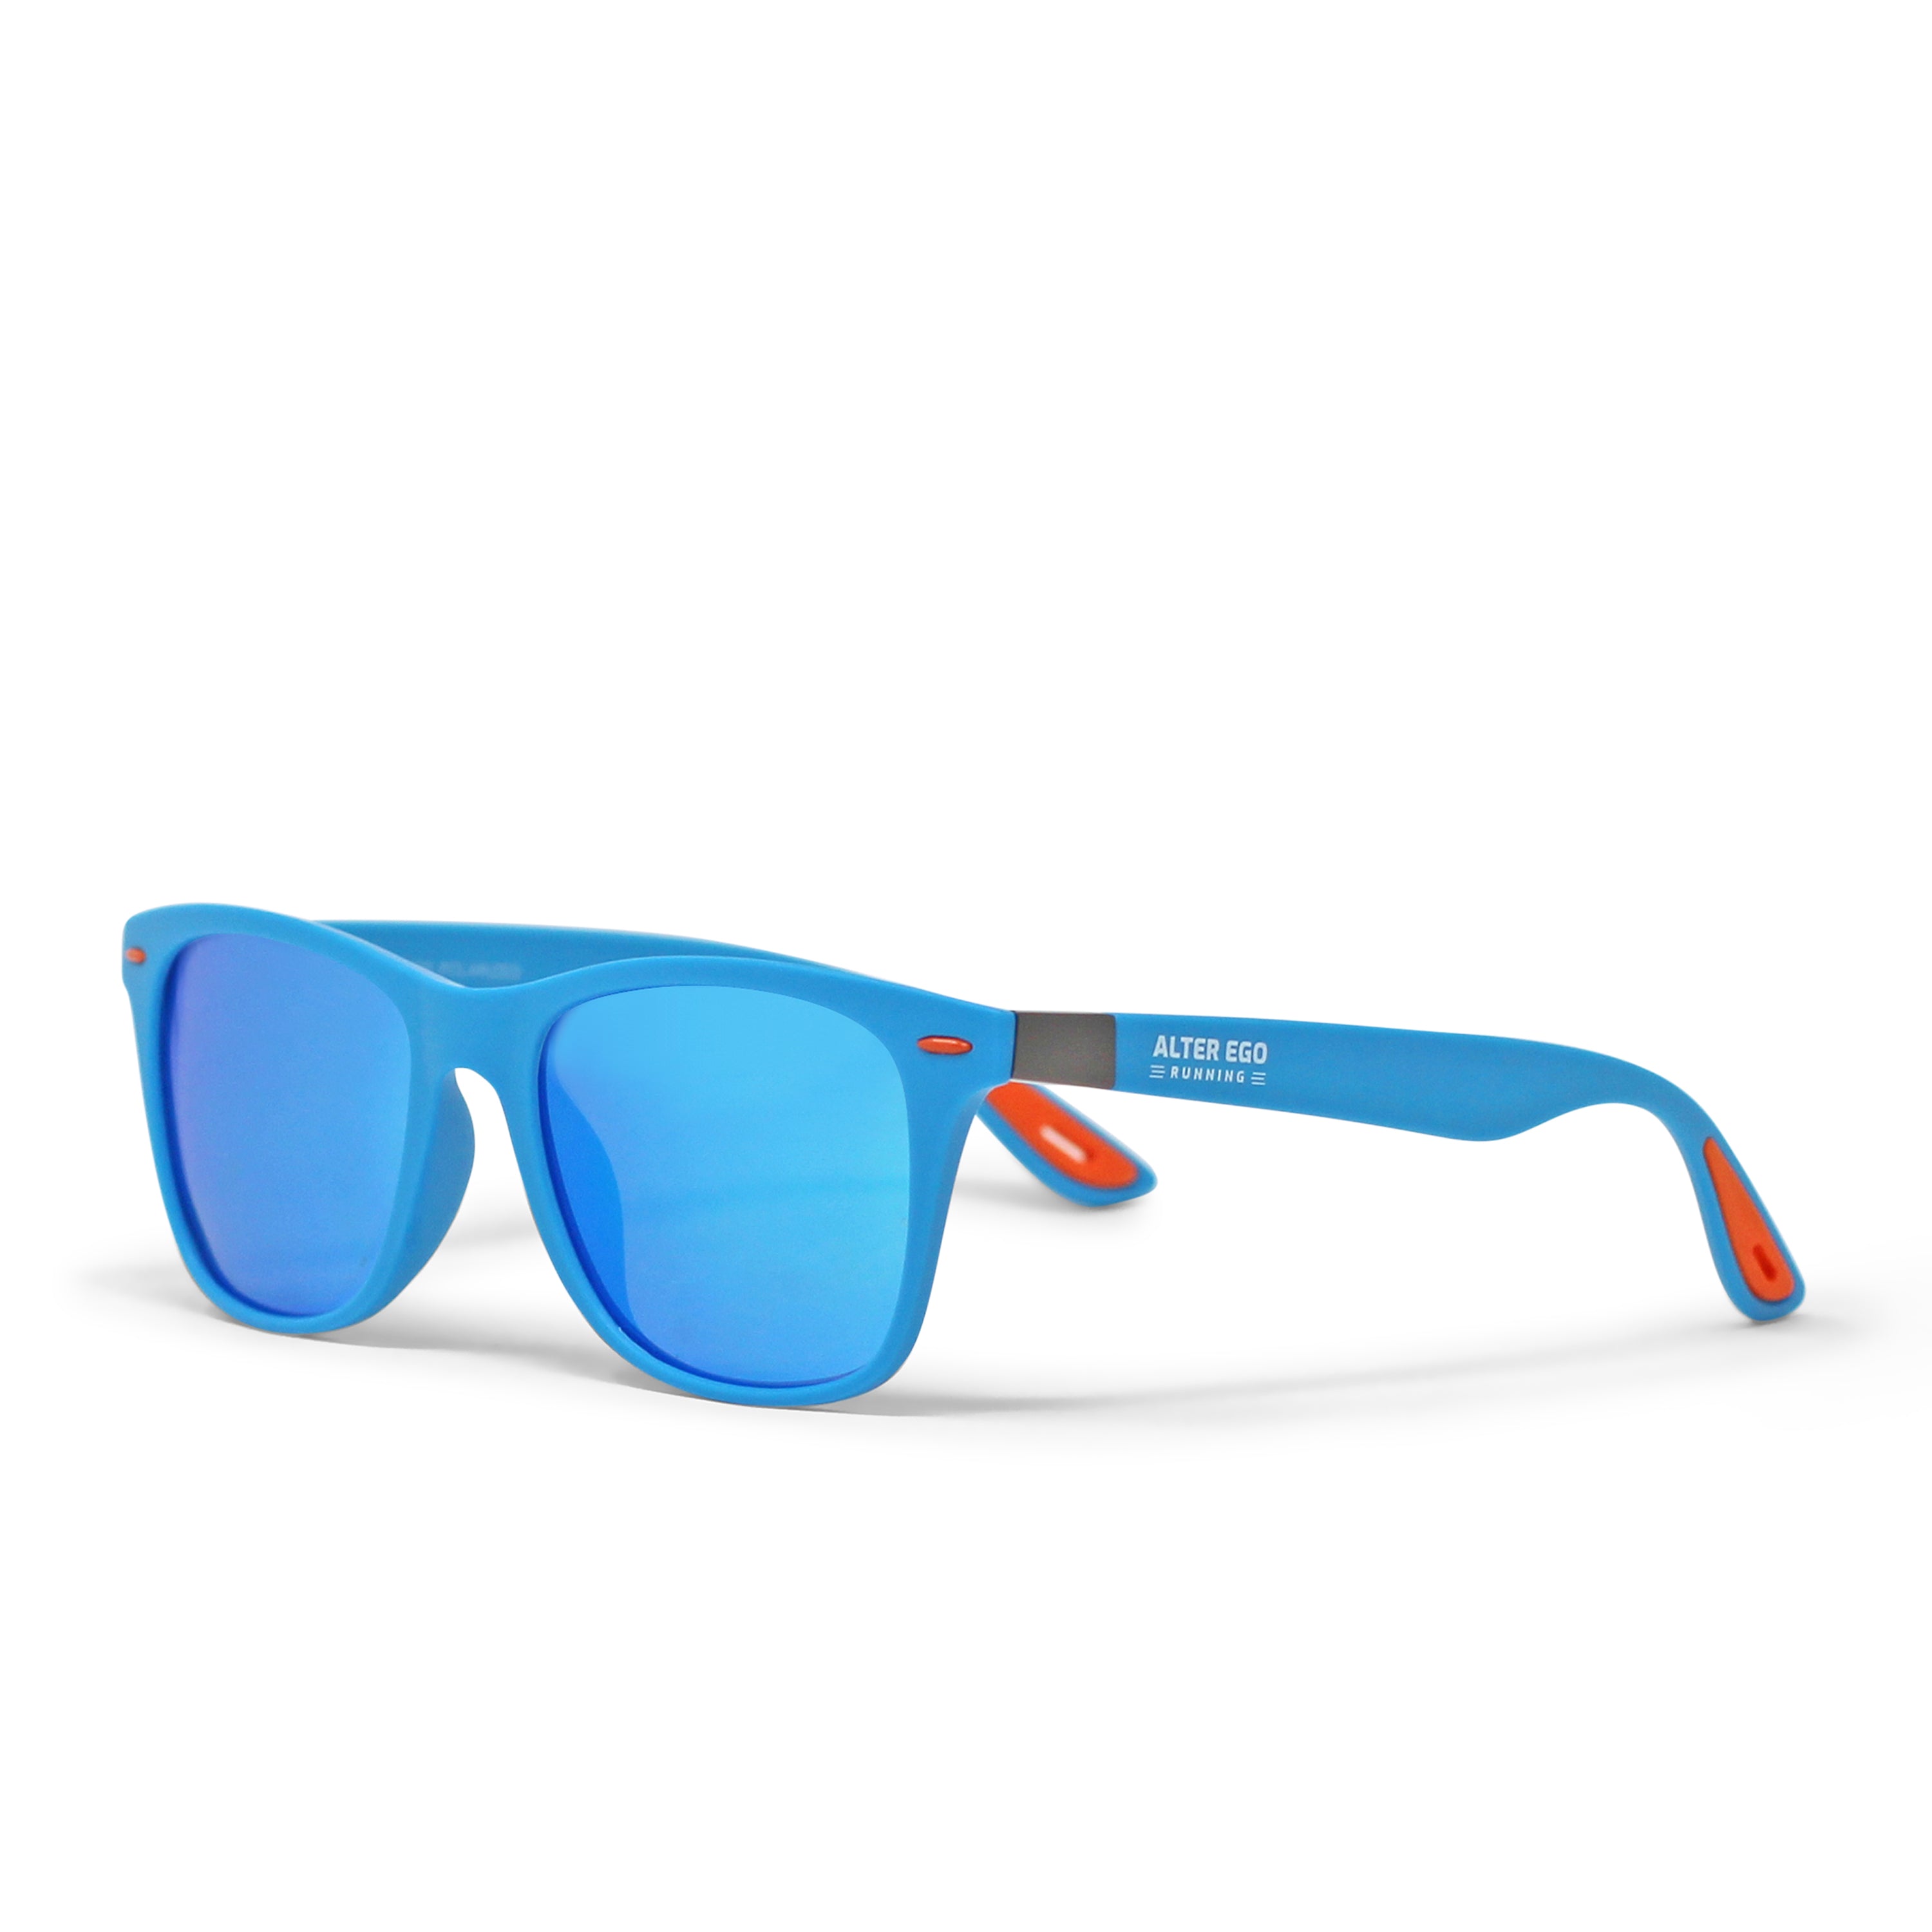 RUN Sunnies - Blue Frame | Blue Polarized Lenses | Orange Elements